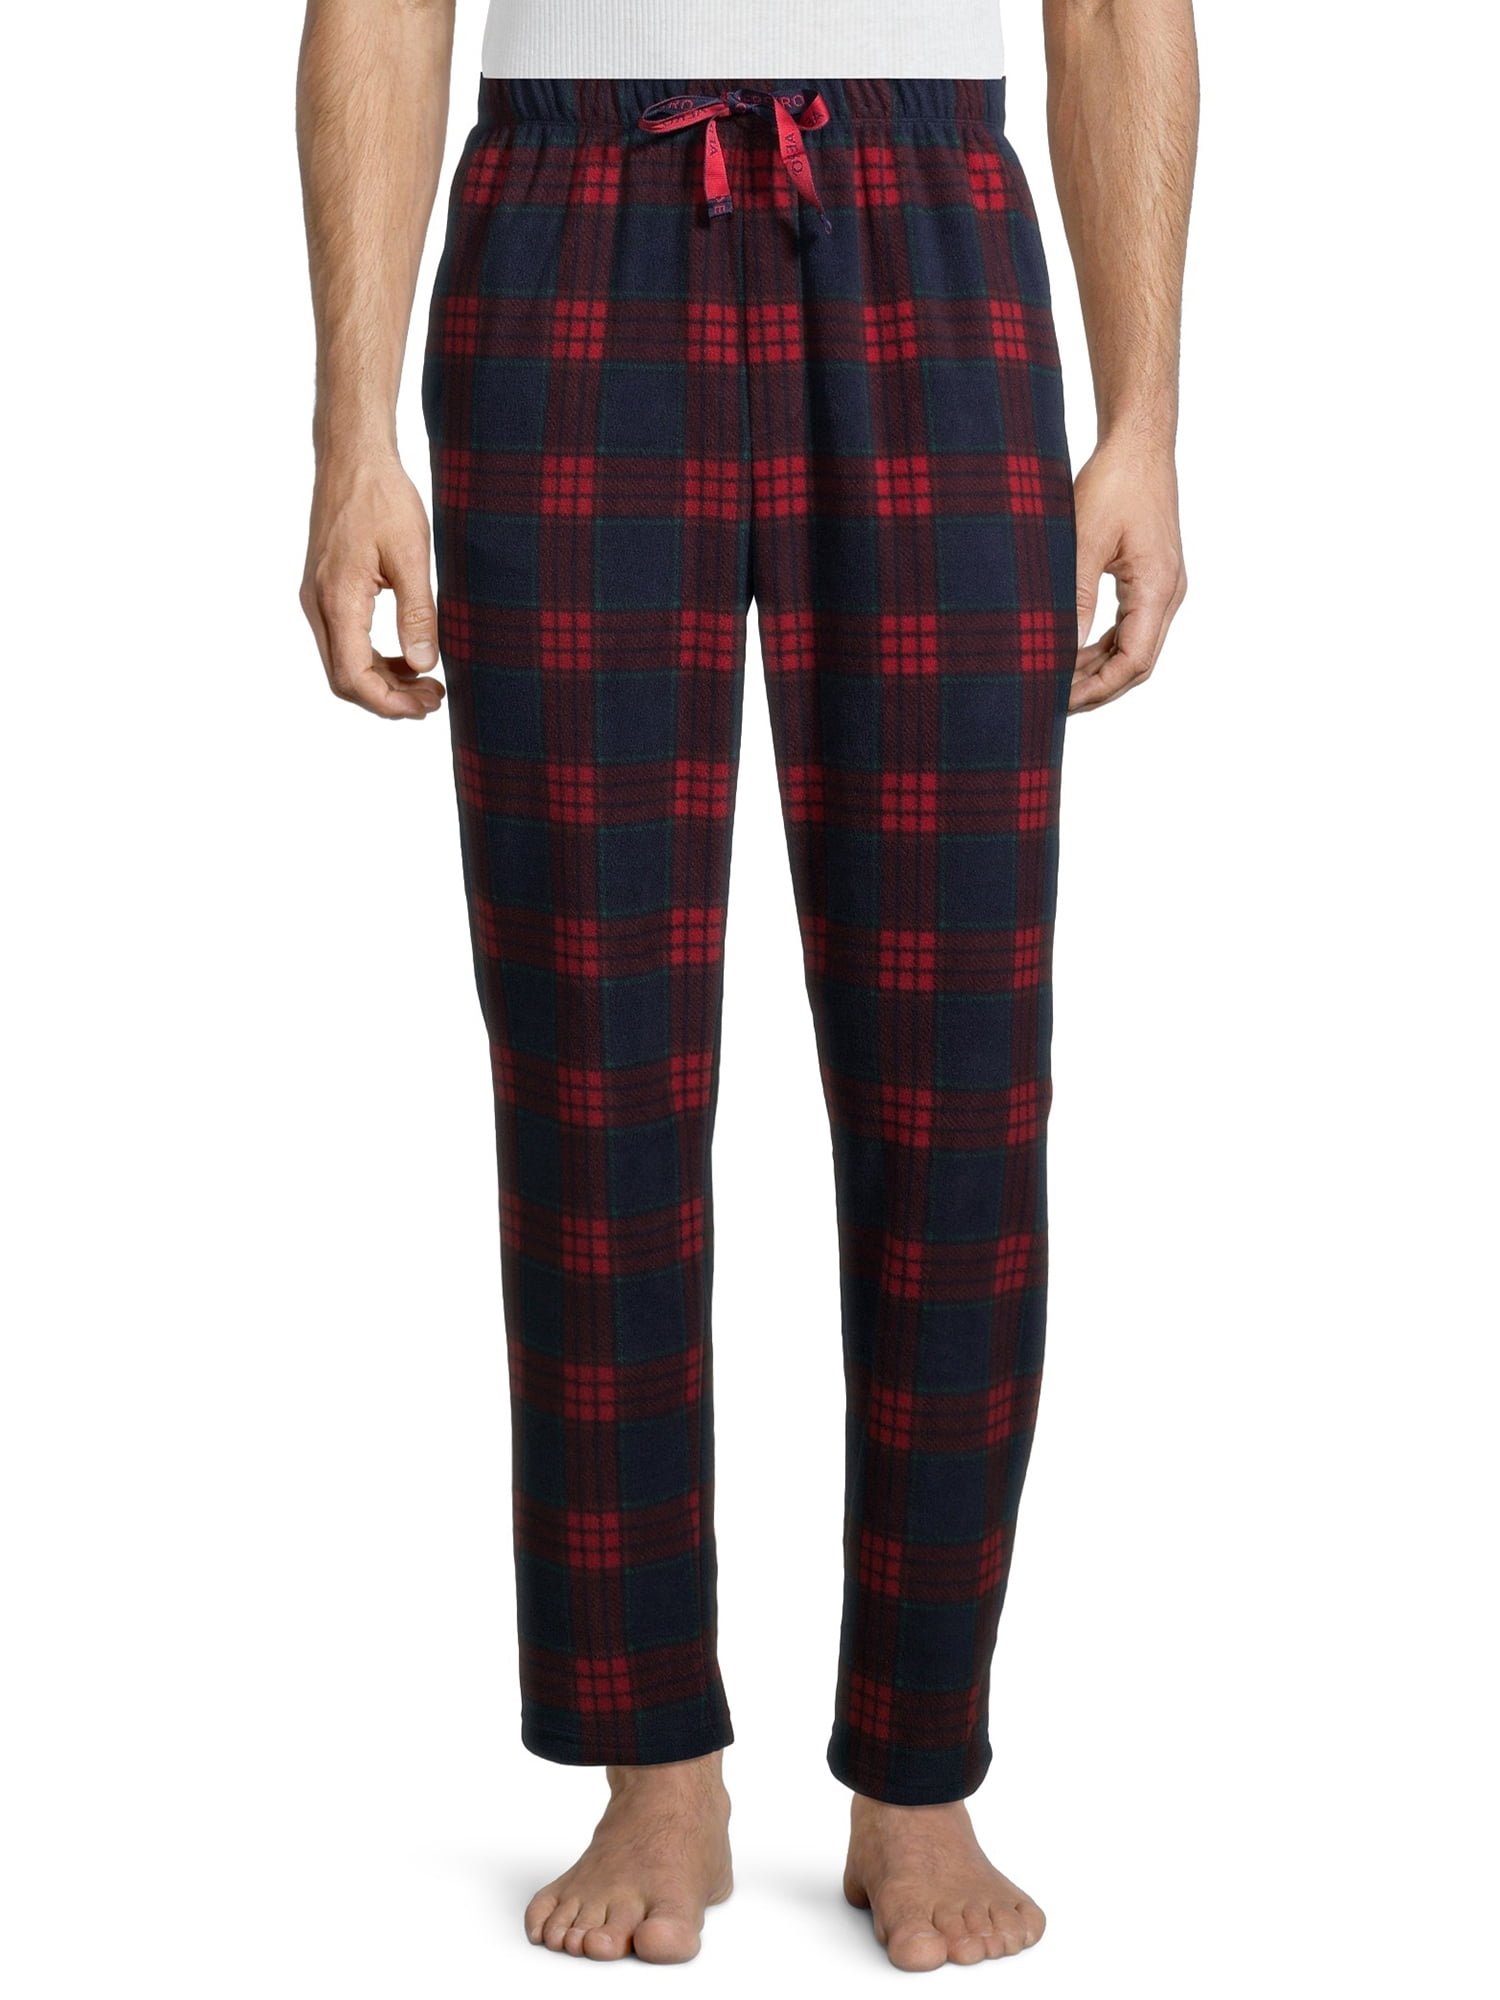 Aeropostale - Aeropostale Men's Fleece Pajama Pants - Walmart.com ...